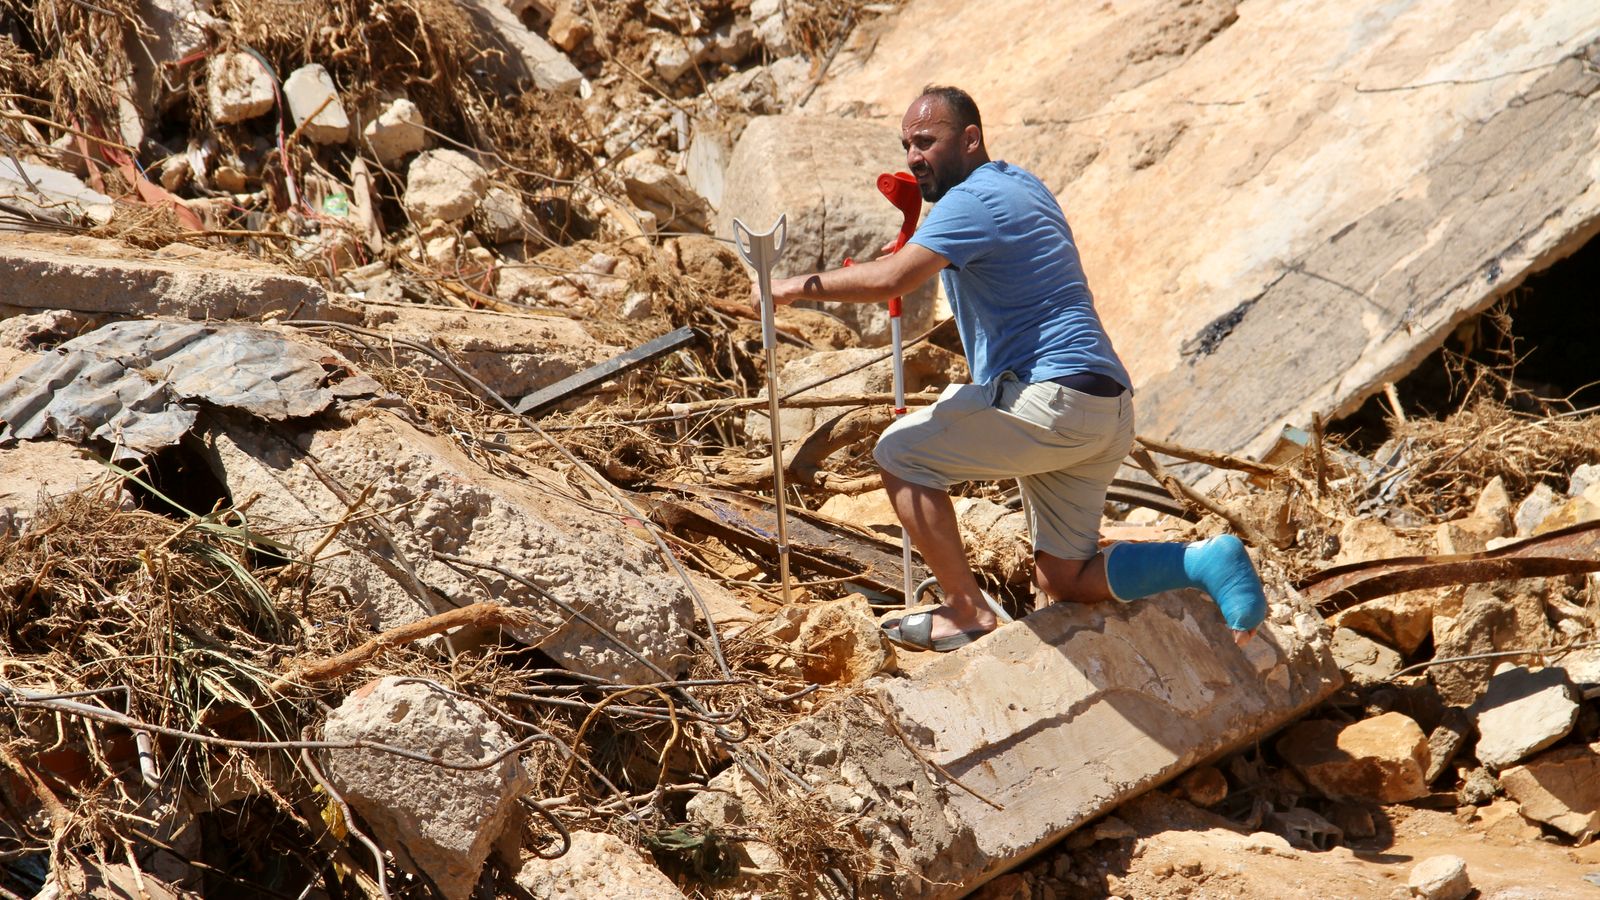 Libya floods: People in Derna use bare hands to dig for survivors - but find only remains